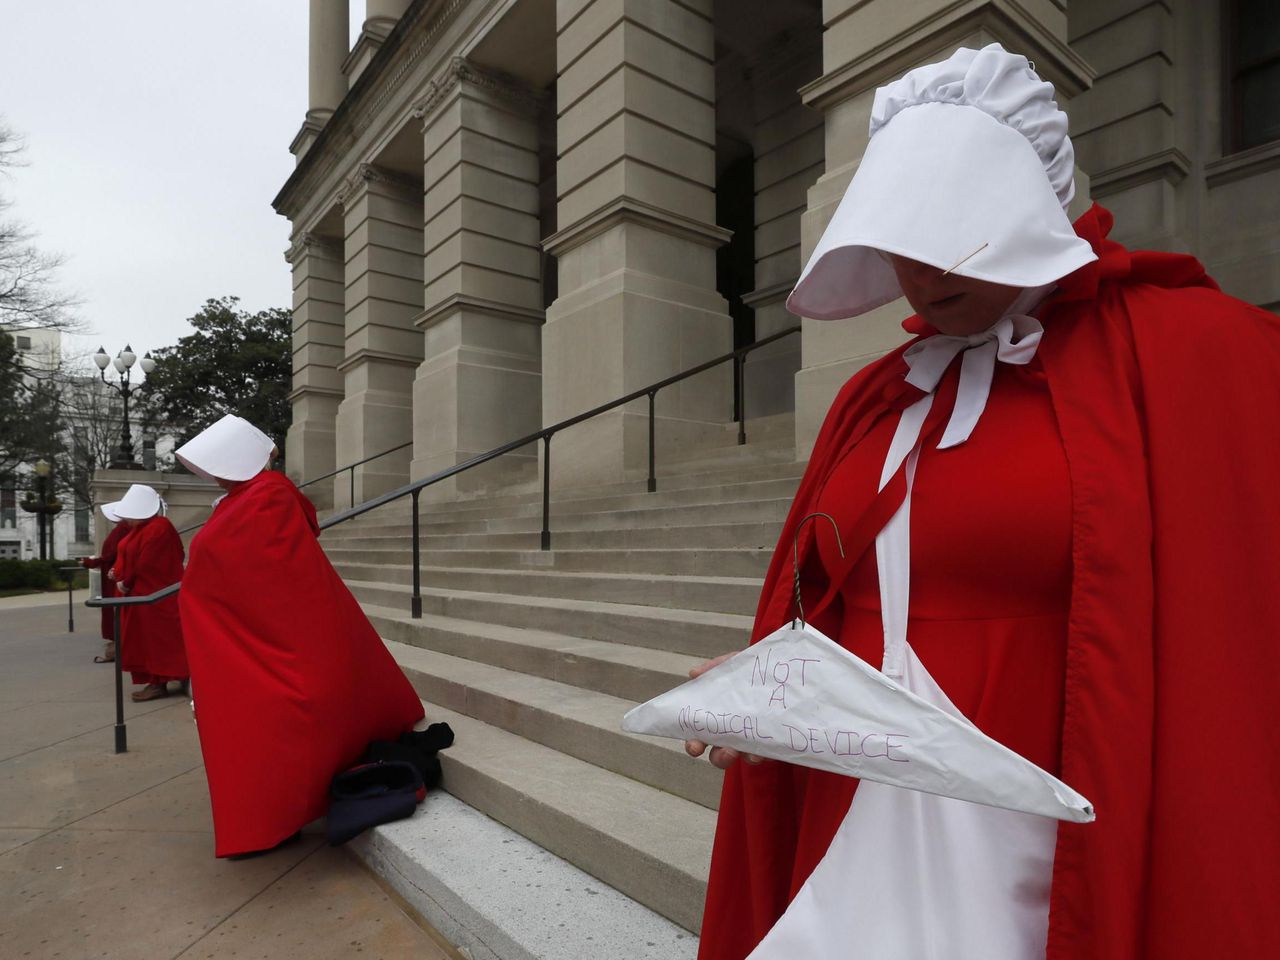 Ohio legislature introduces laws regarding ectopic pregnancies. Image via AP.